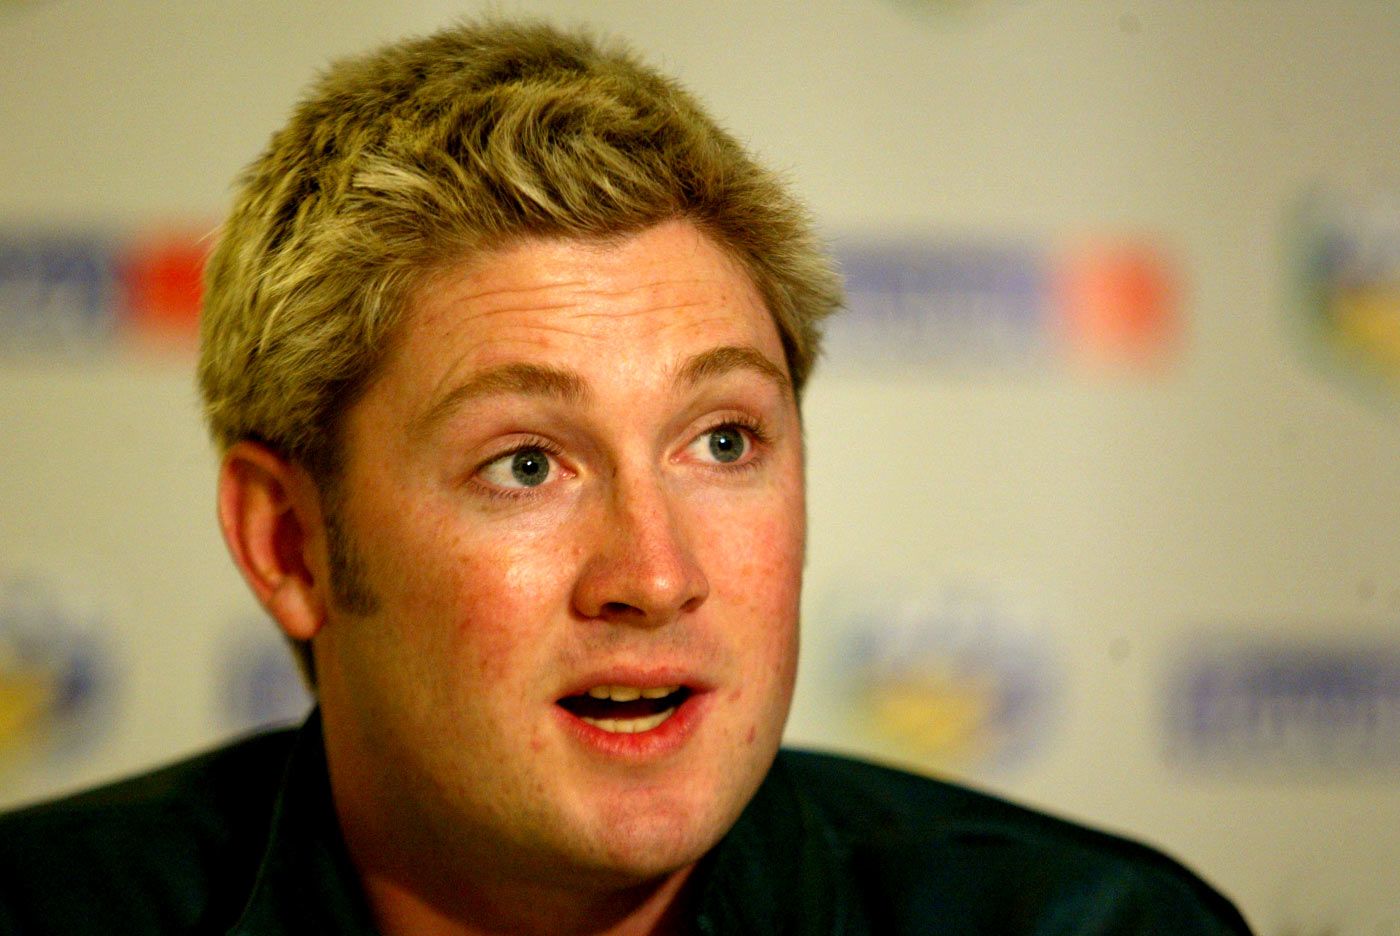 Critics cry 'no ball!' over Australian cricketer's endorsement of ICO